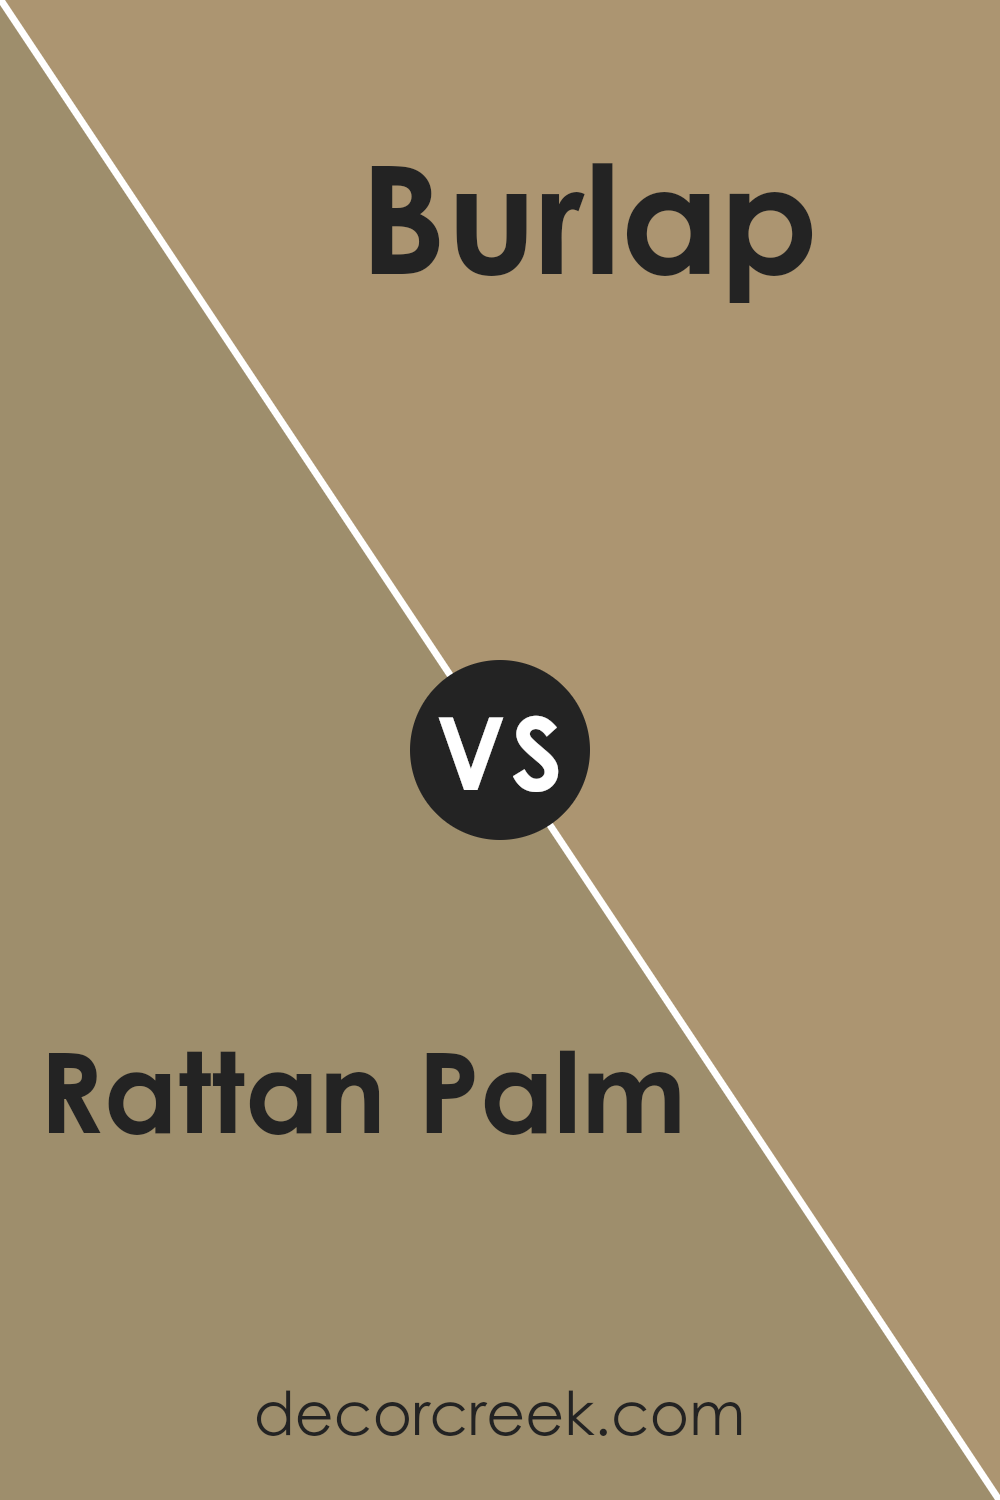 rattan_palm_sw_9533_vs_burlap_sw_6137